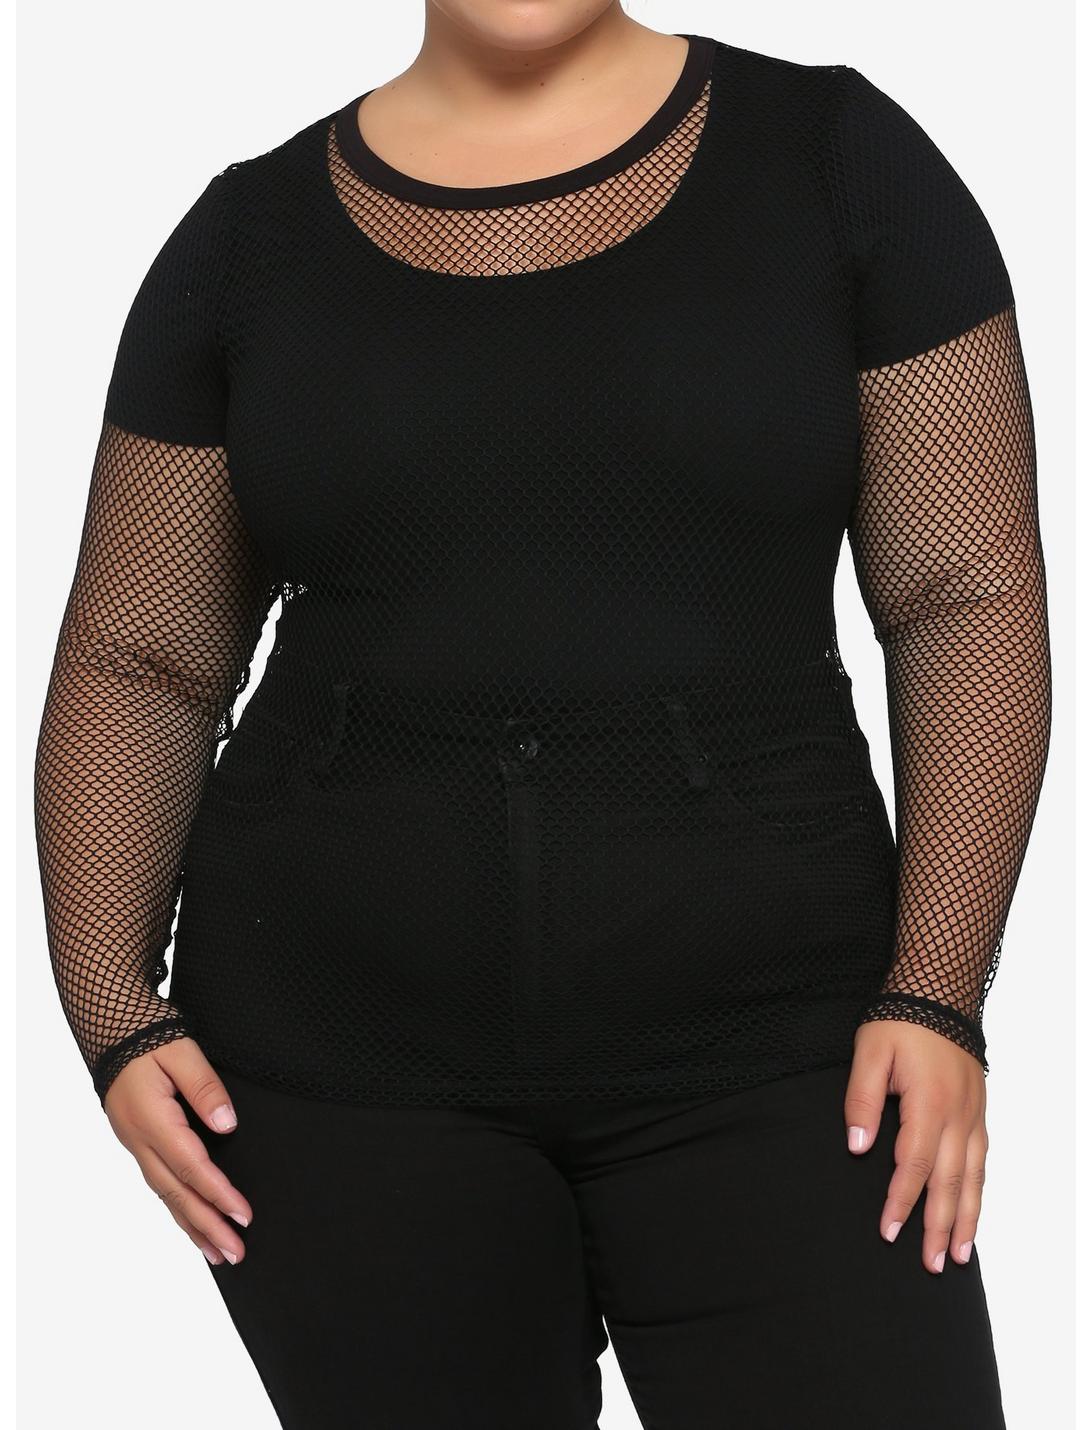 Black Fishnet Mesh Girls Long-Sleeve Top Plus Size, BLACK, hi-res